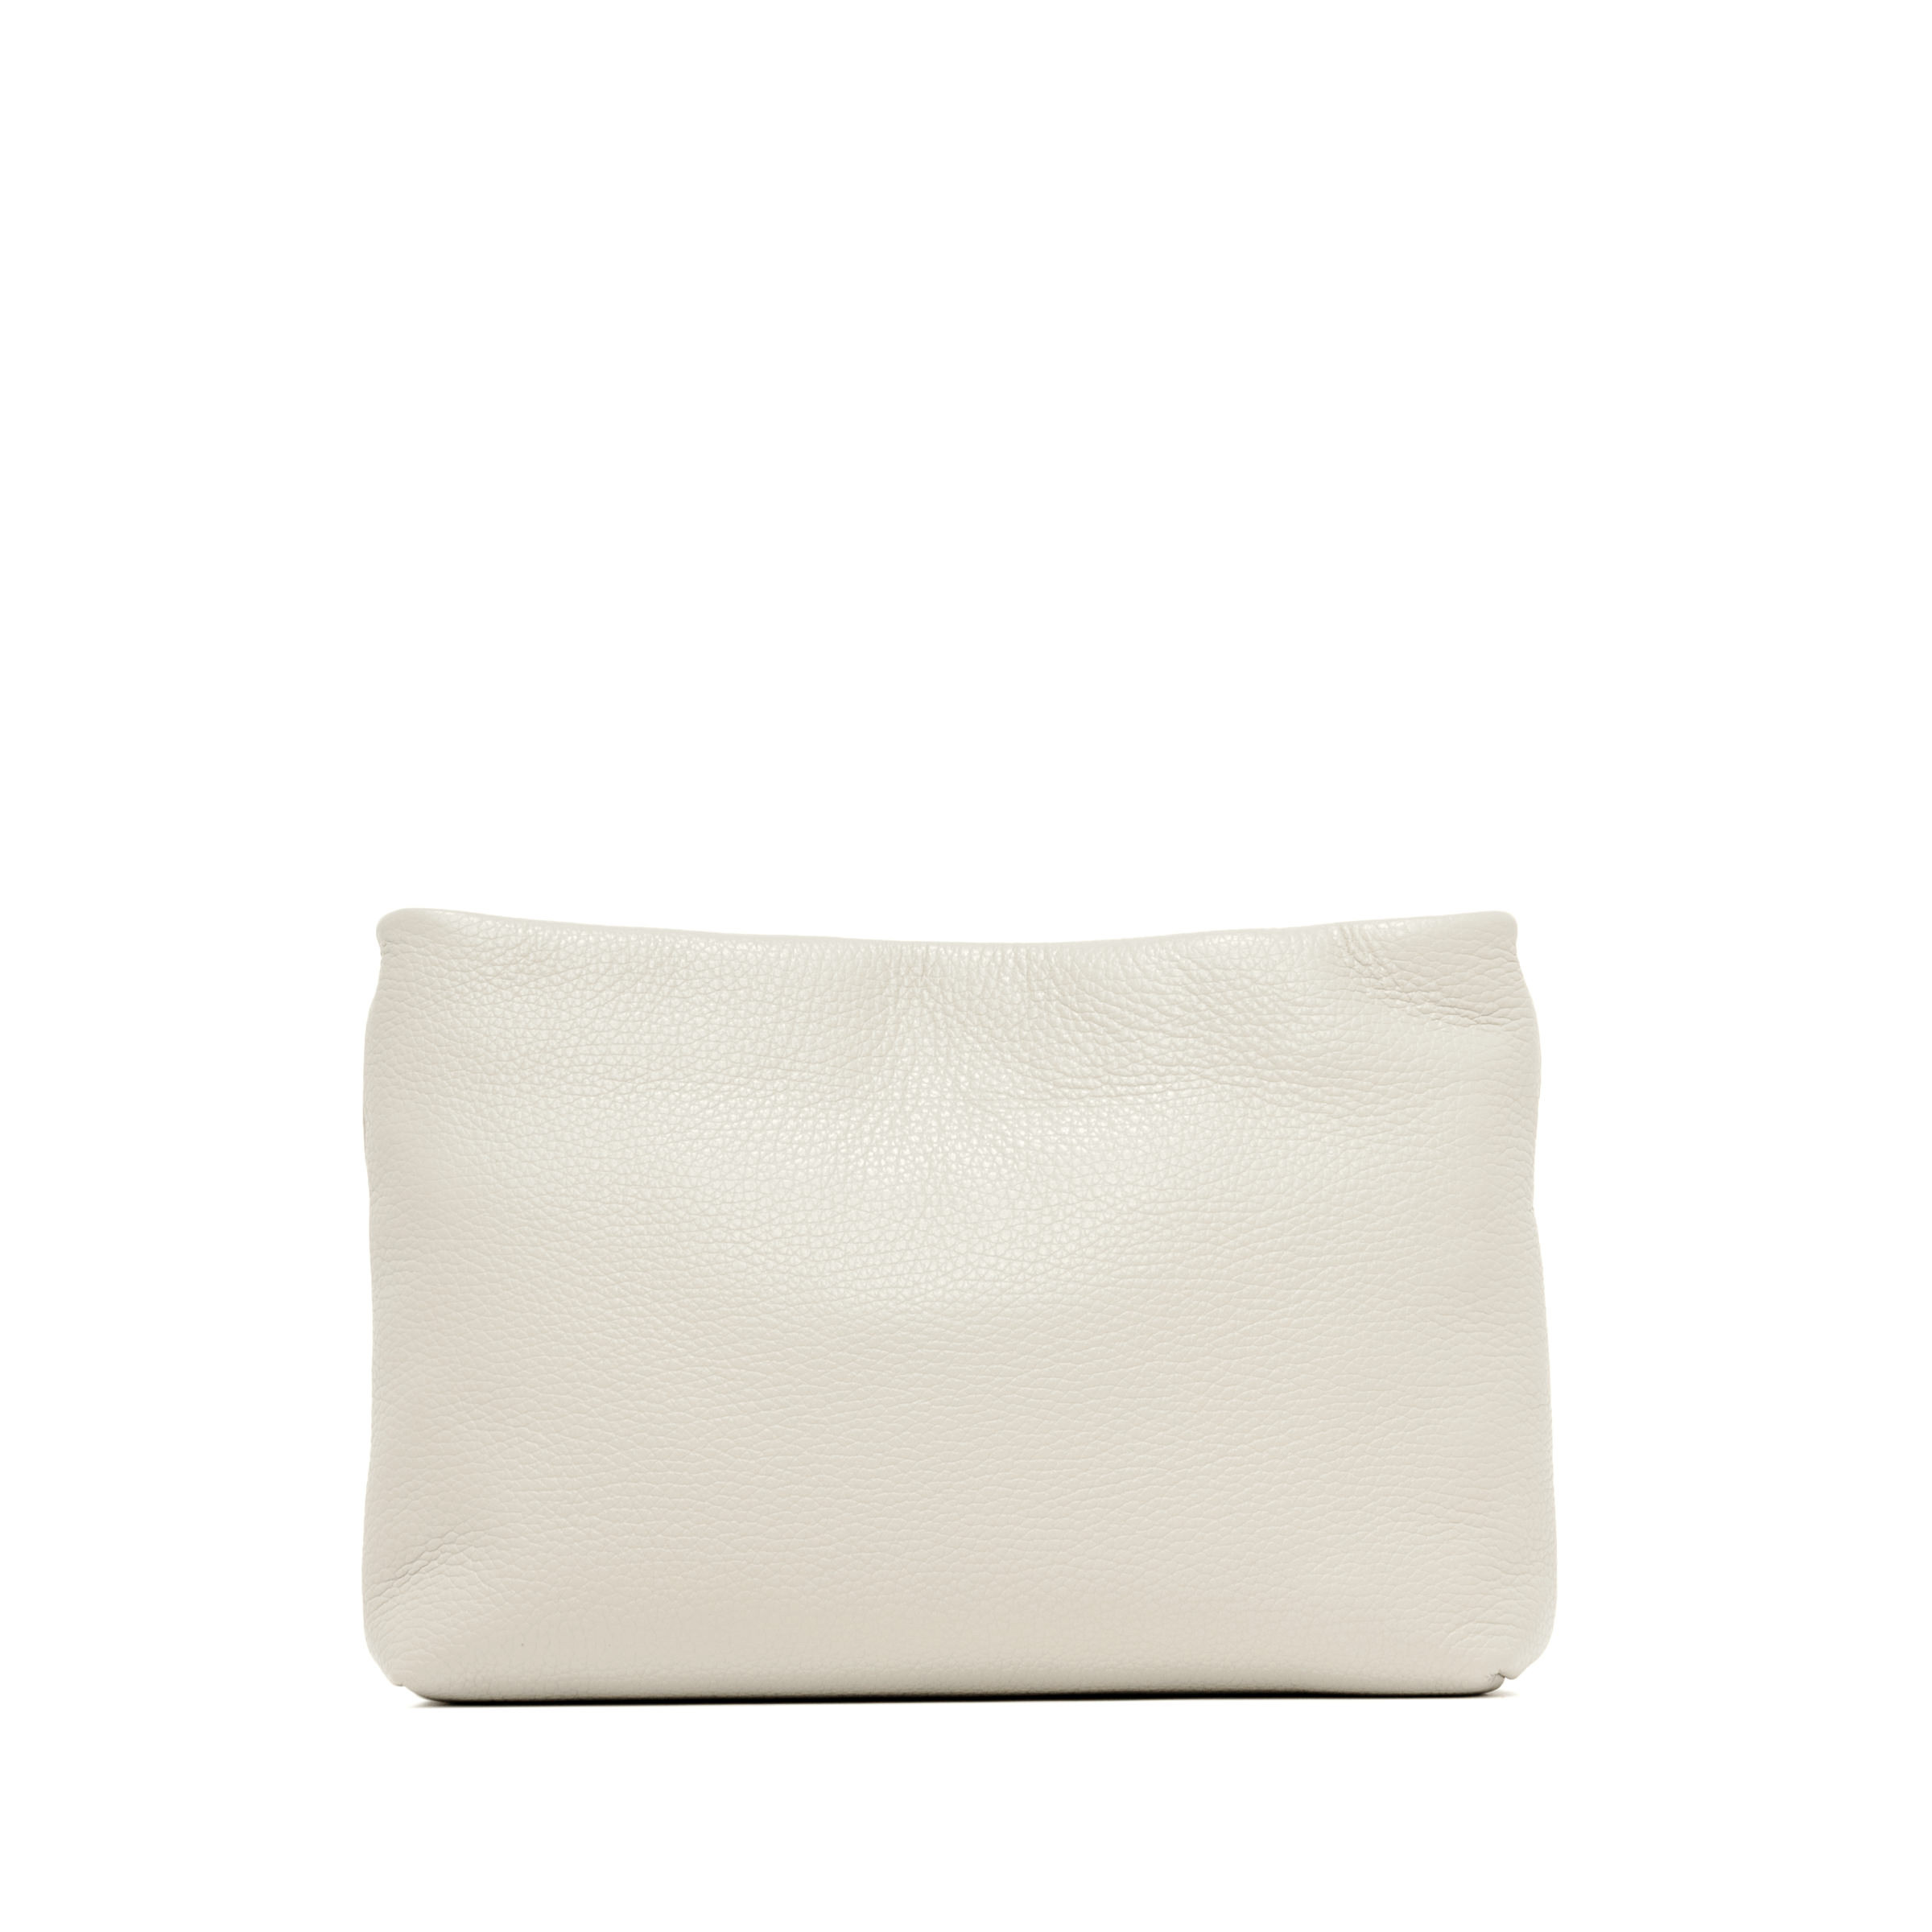 Gianni Chiarini - Brenda leather bag, White, large image number 3